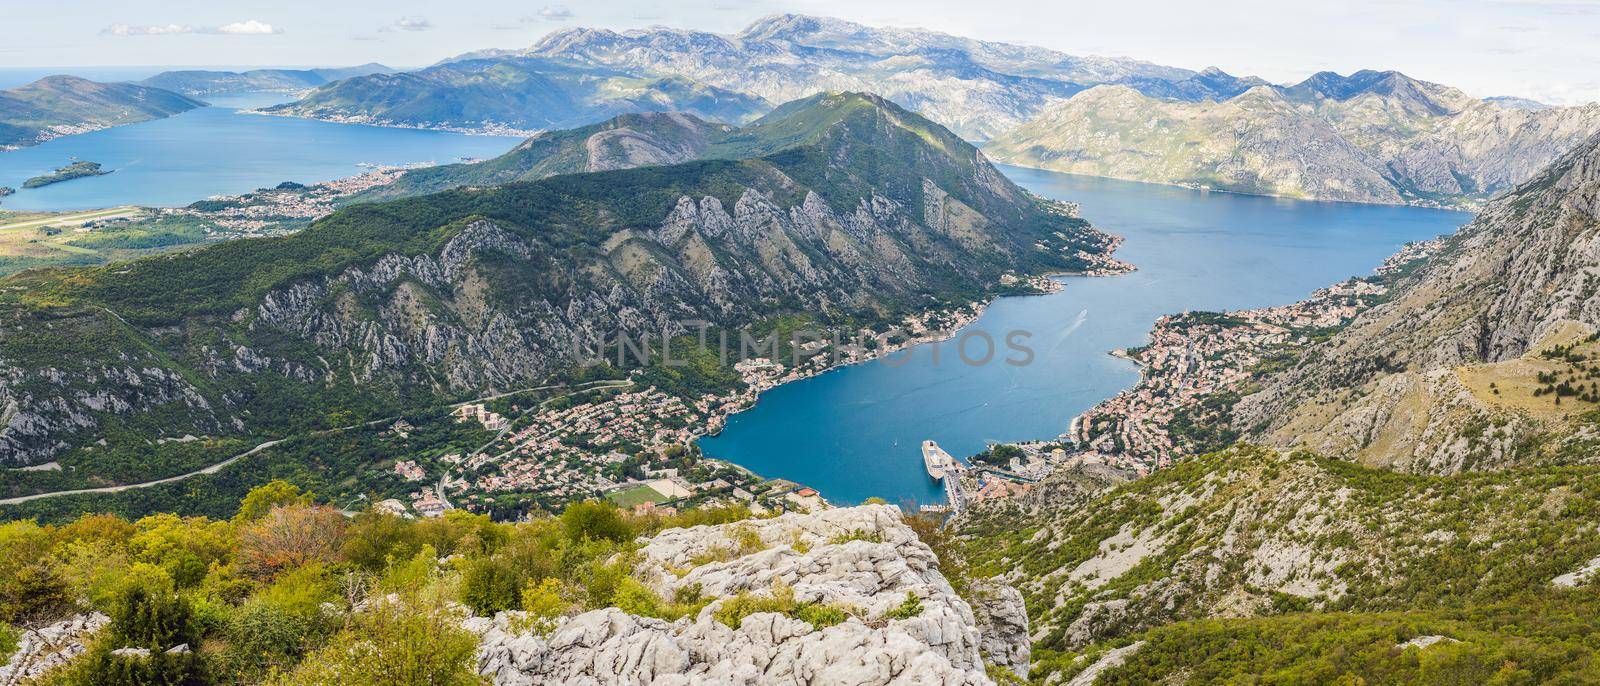 Montenegro. Bay of Kotor, Gulf of Kotor, Boka Kotorska and walled old city. Fortifications of Kotor is on UNESCO World Heritage List since 1979.